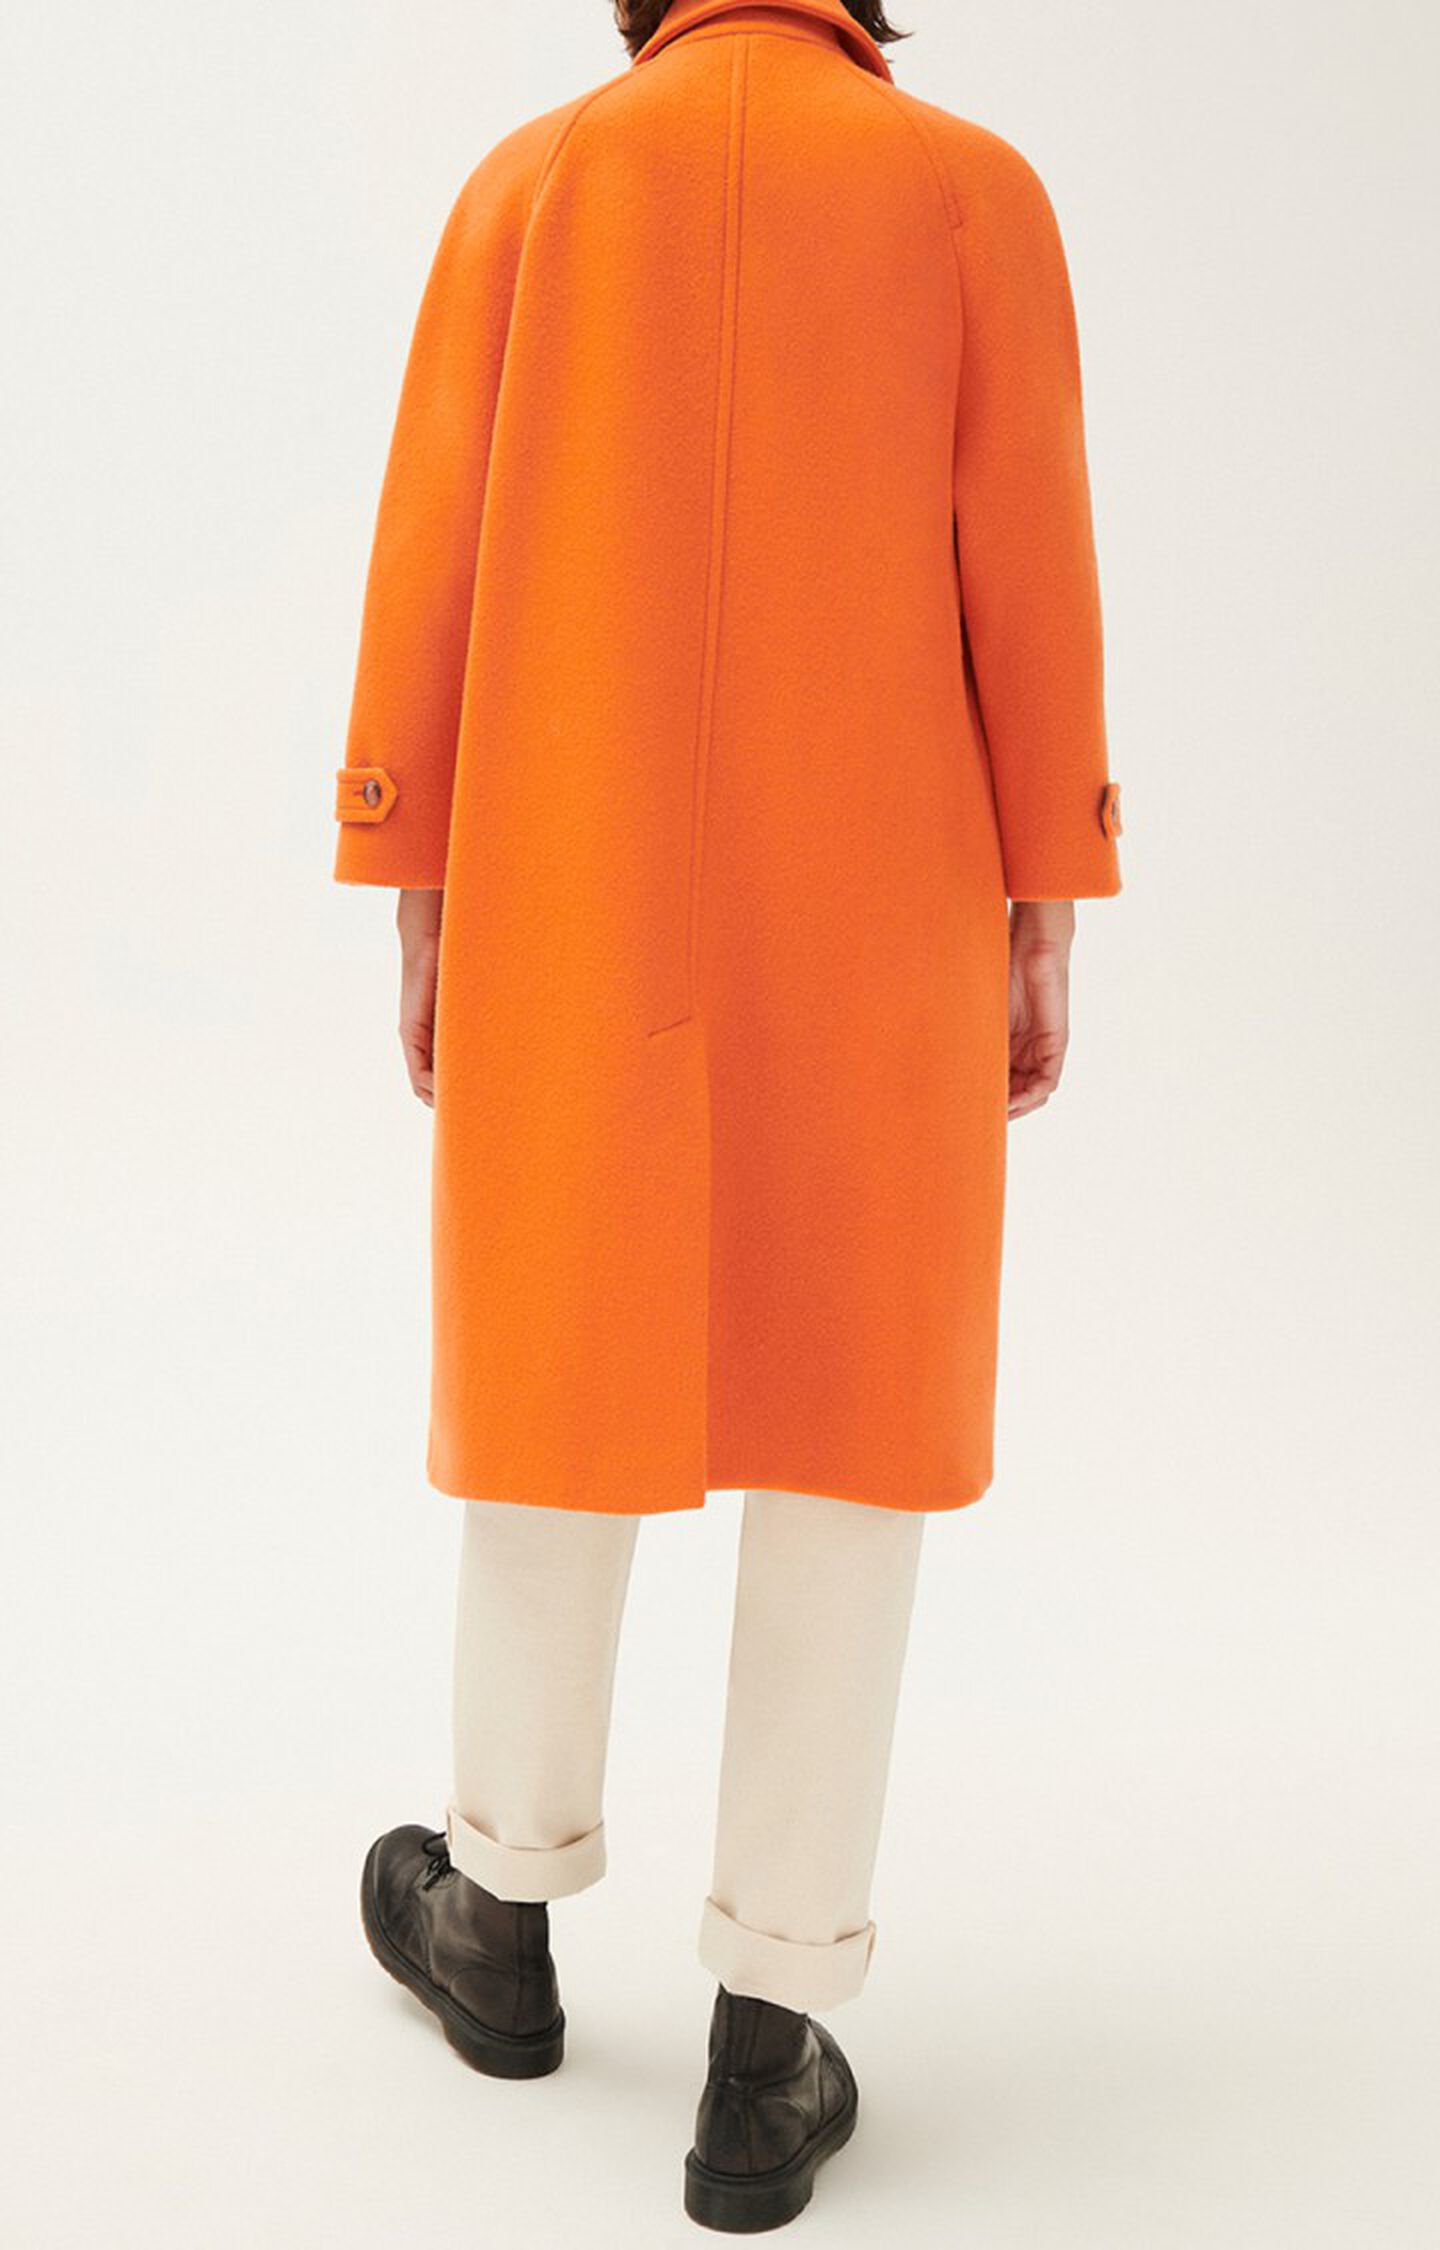 CAICJ98 All Sweaters Women's Winter Classic Outwear Overcoat with Pockets  Single Coat Orange,XL